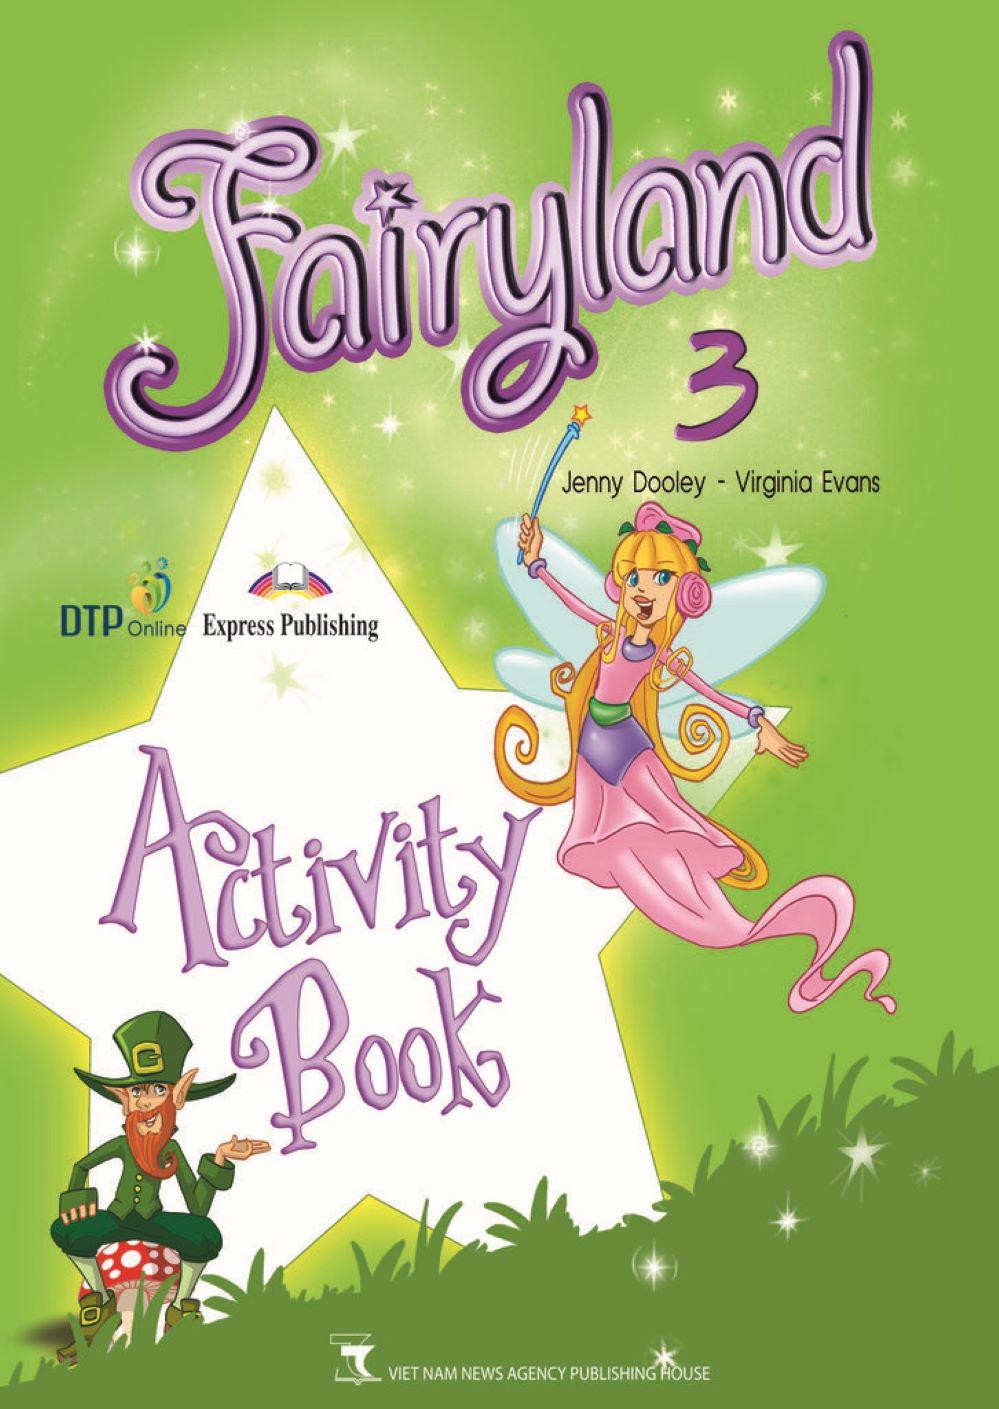 Fairyland 3 Activity Book